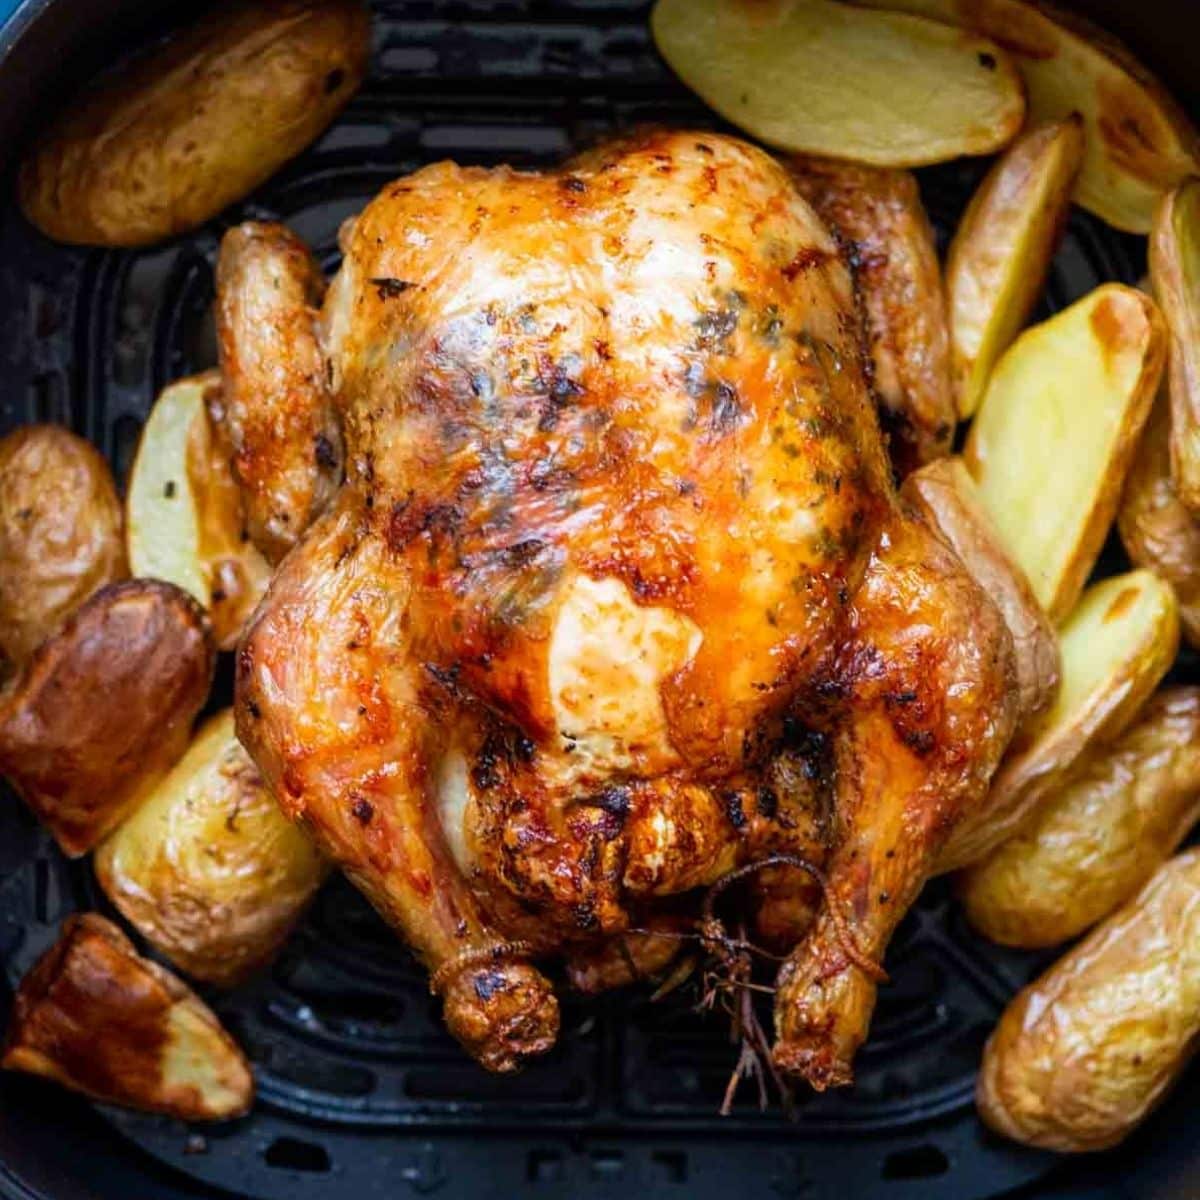 https://carameltintedlife.com/wp-content/uploads/2021/10/whole-roast-chicken.jpg